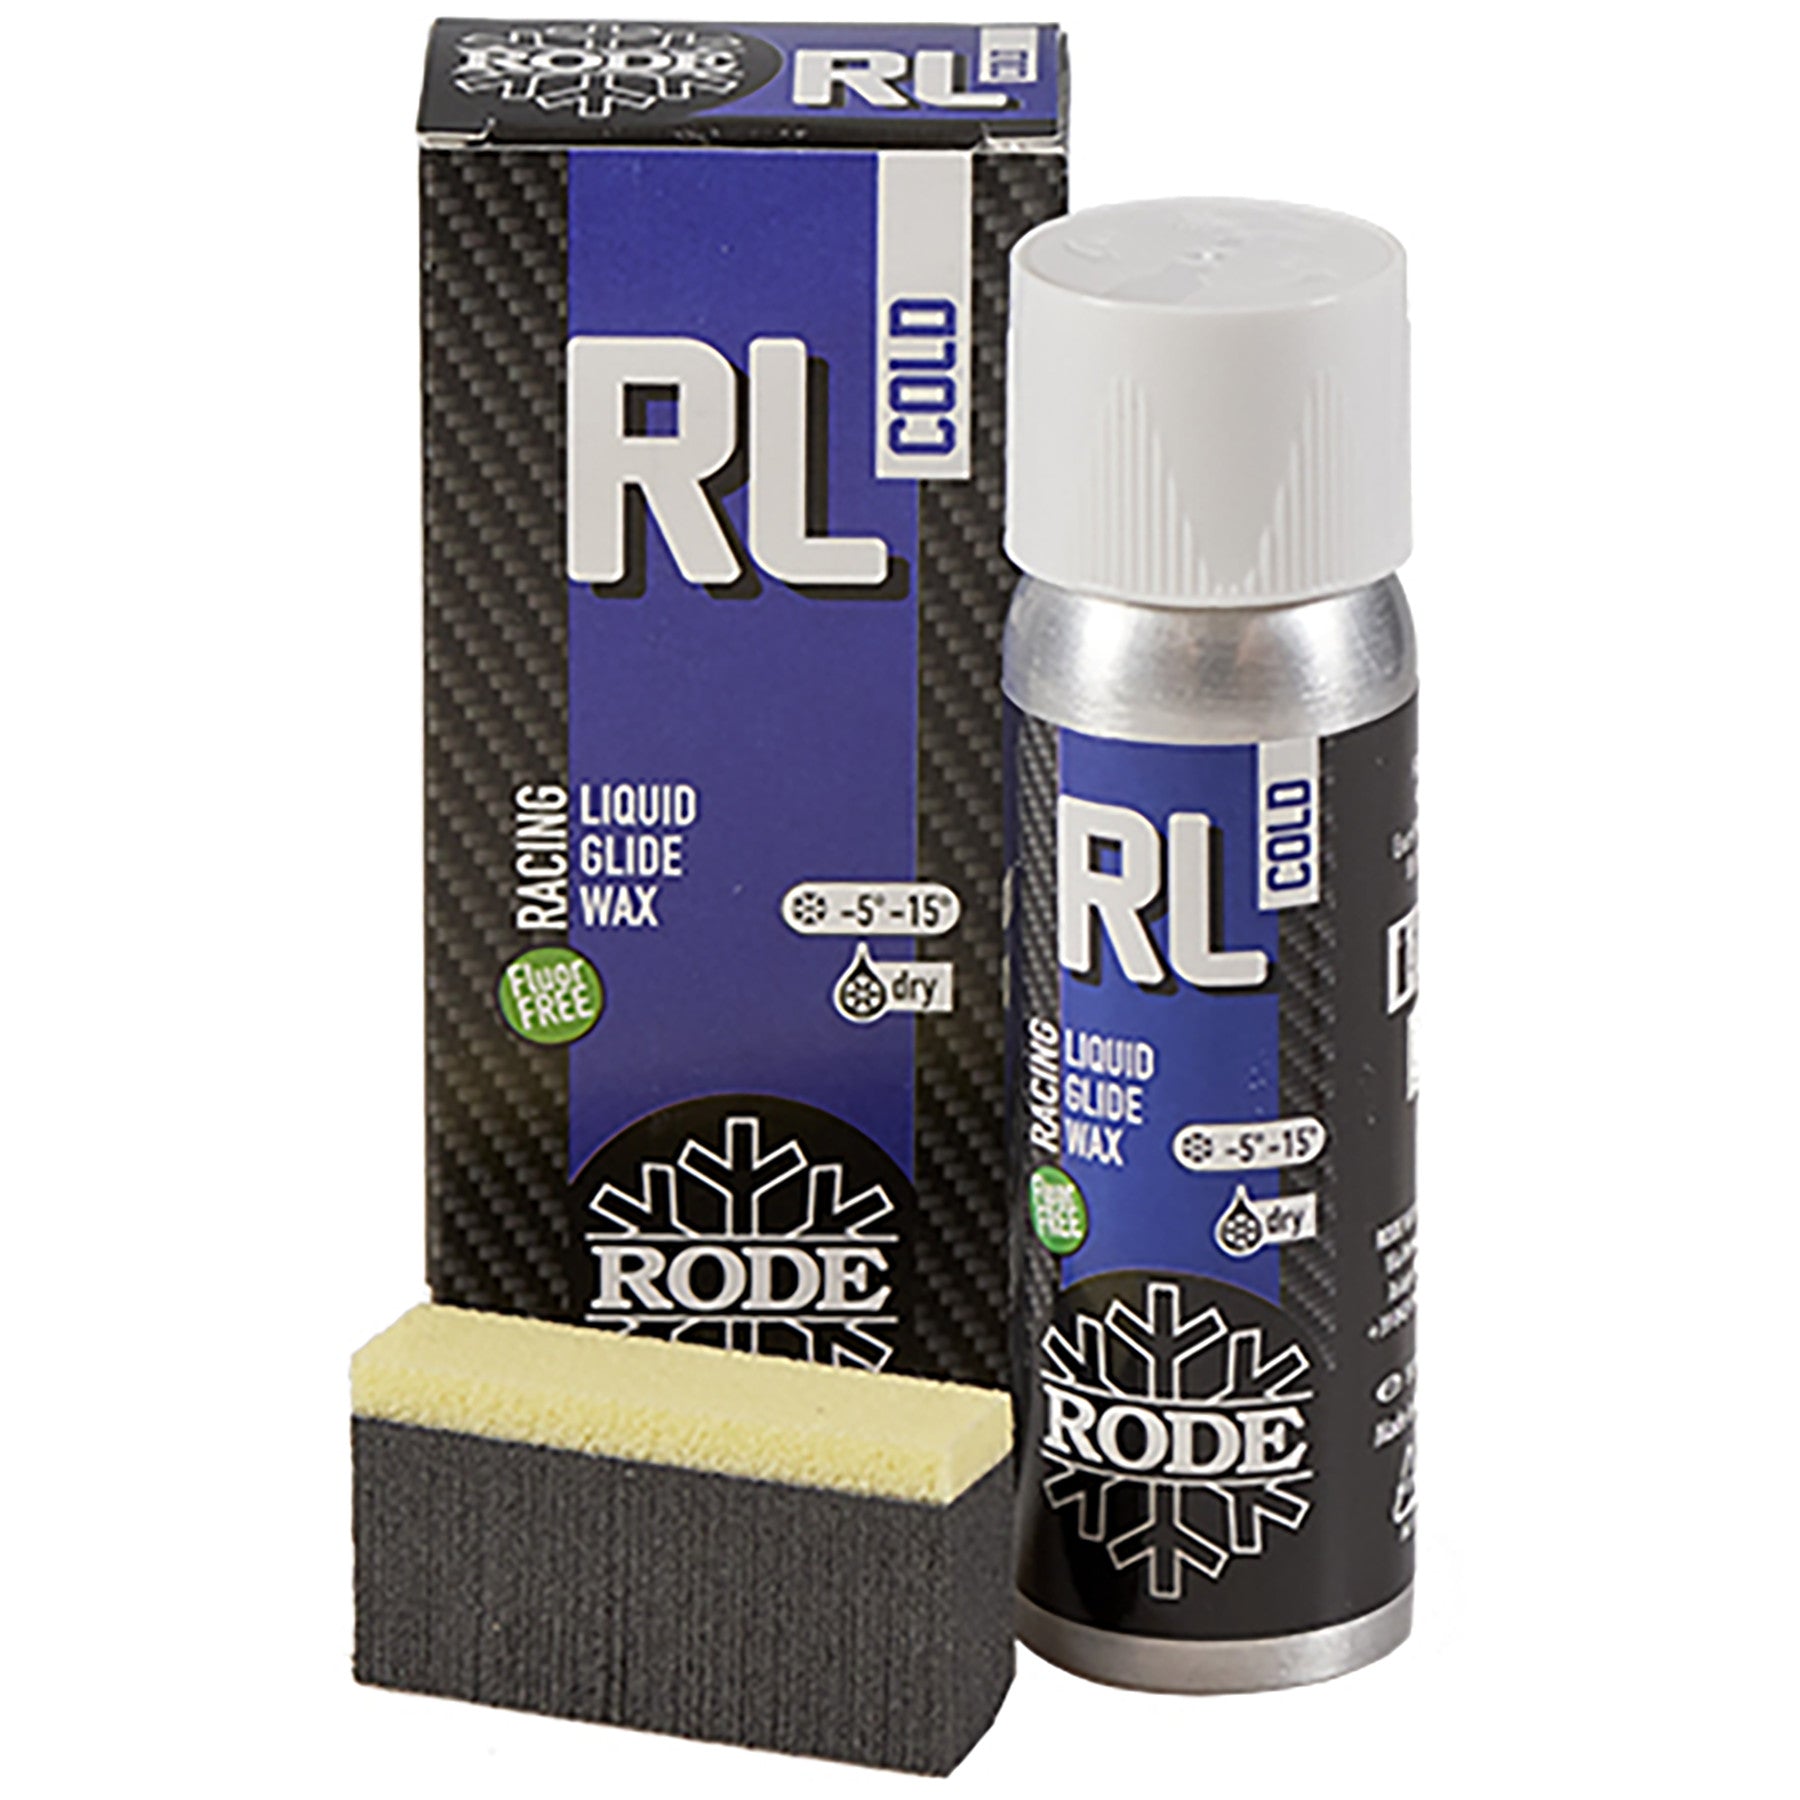 Buy blue-cold-15-5-c Rode RL Racing Liquid Glide Wax 80mL